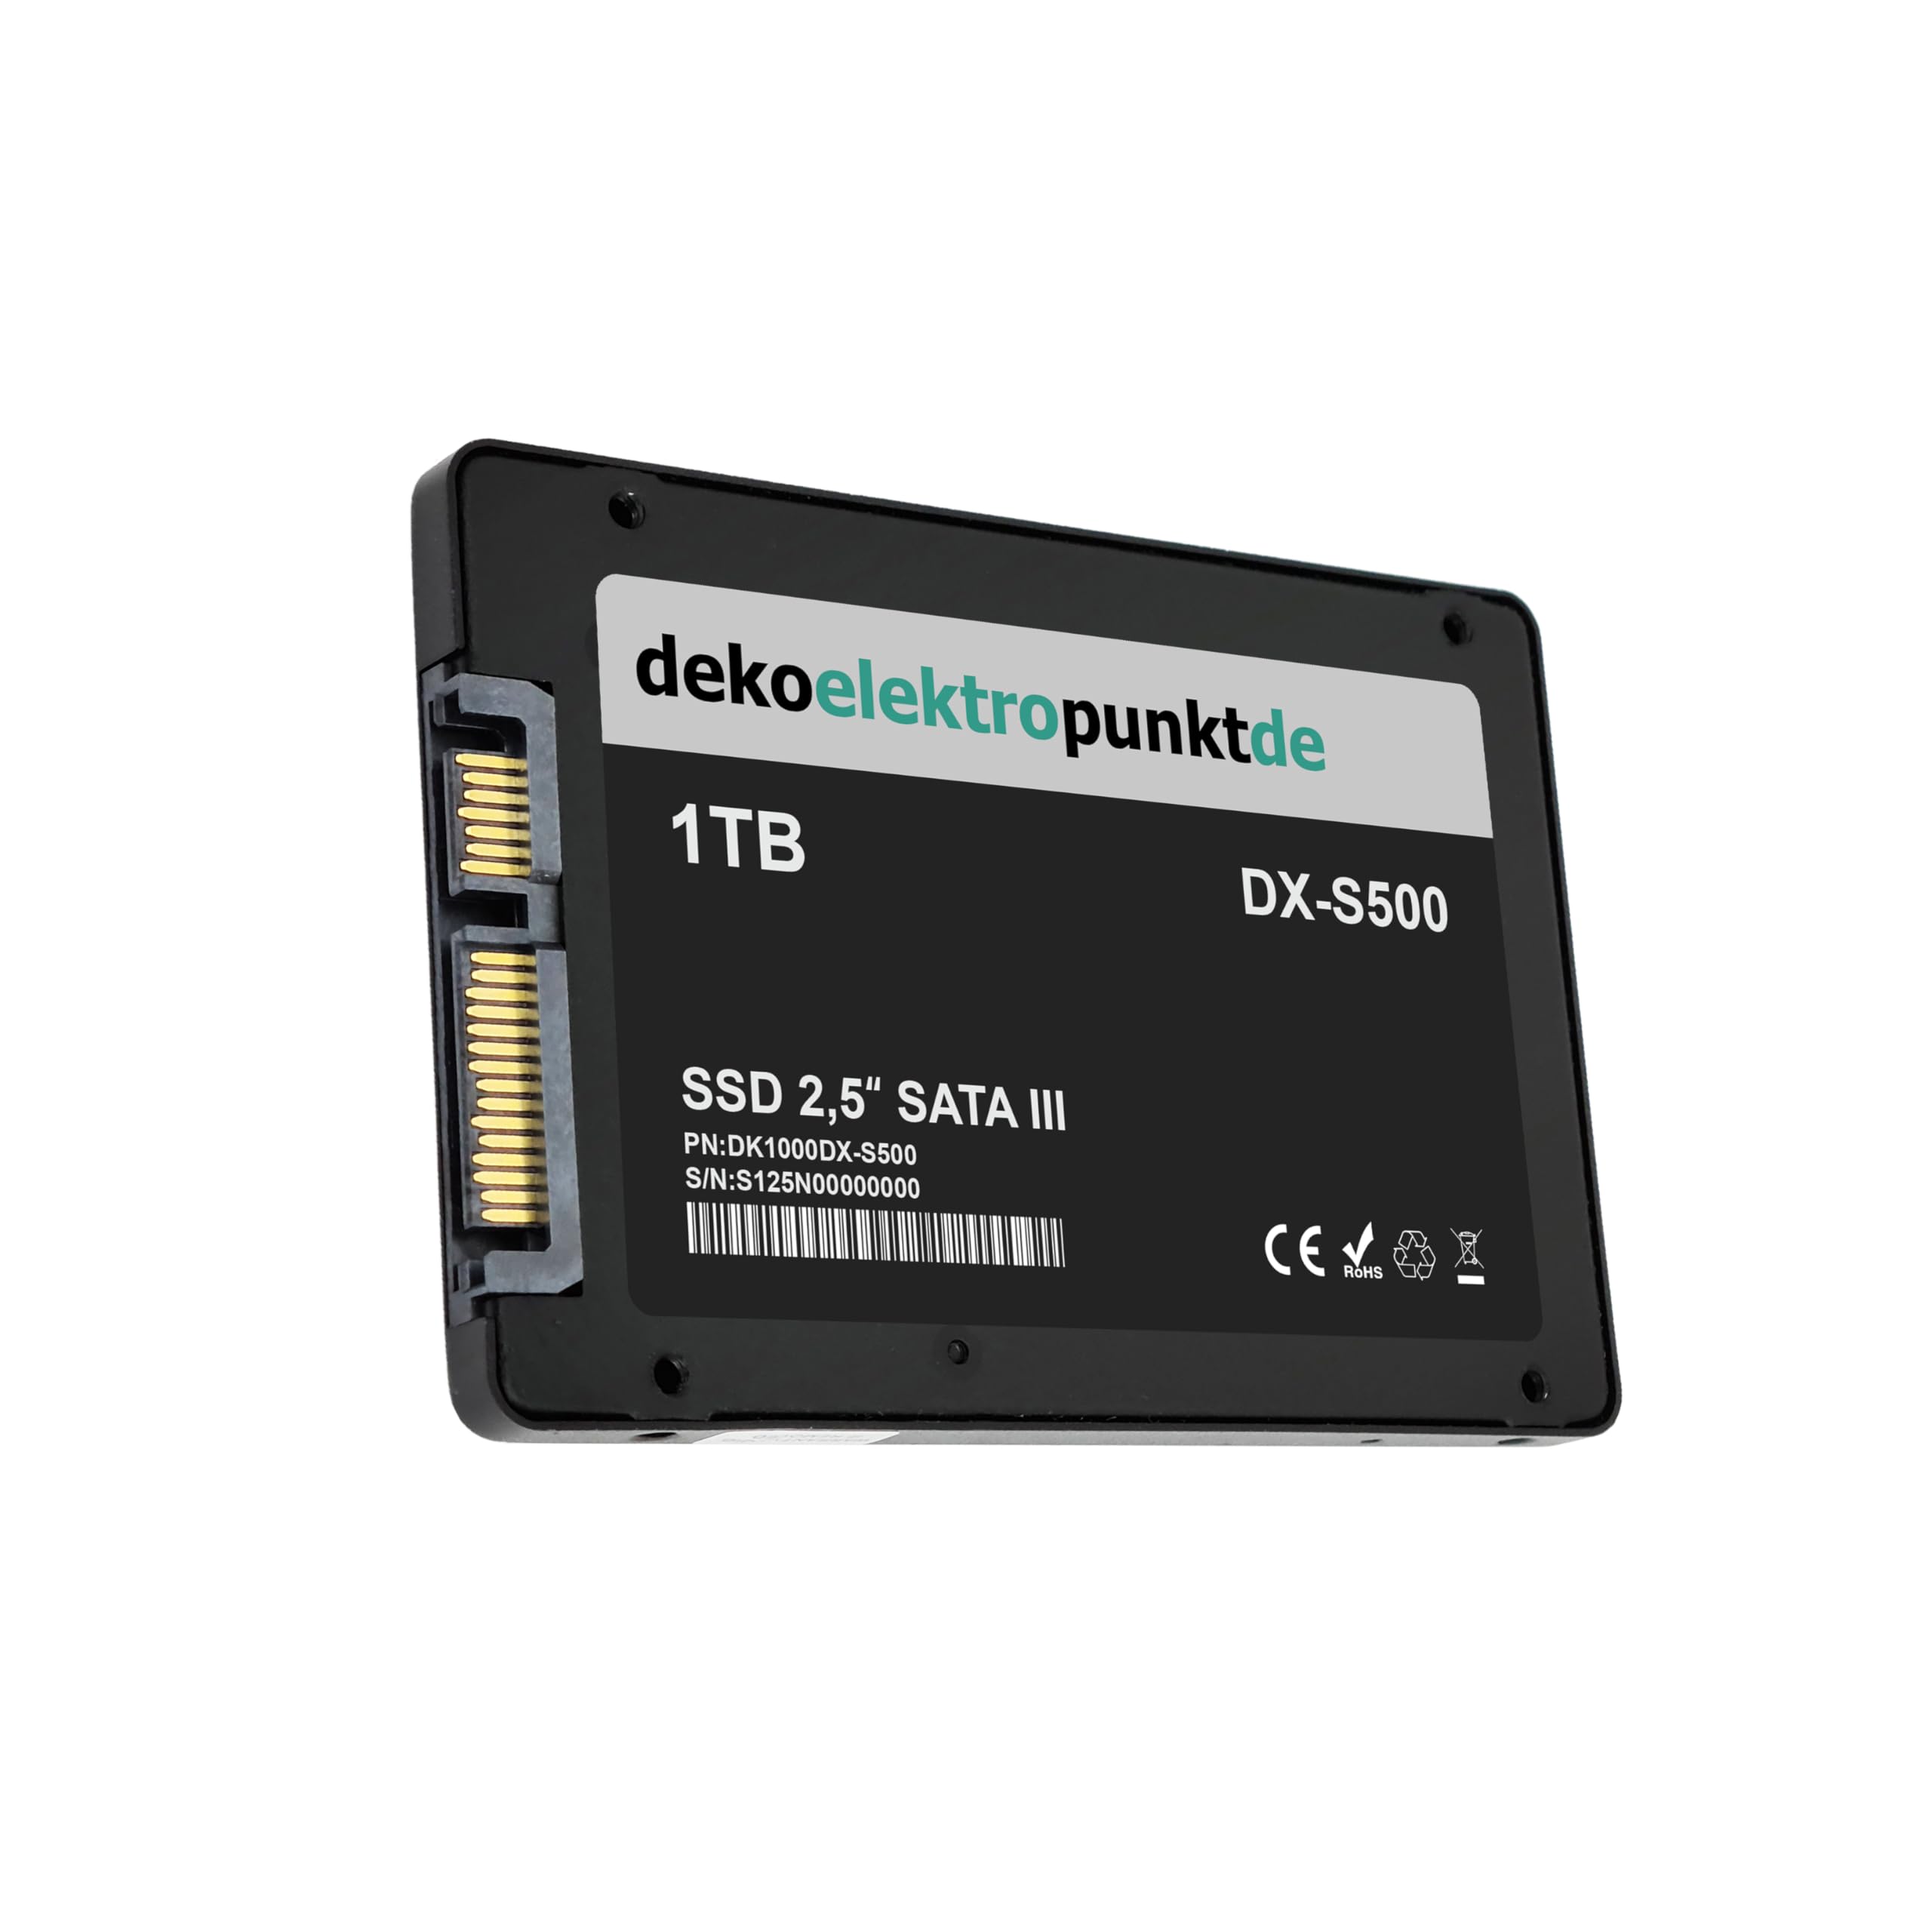 dekoelektropunktde 1TB SSD Festplatte kompatibel mit Samsung N150-Eom N270BBT N350-JA02DE NB30-HTT1DE